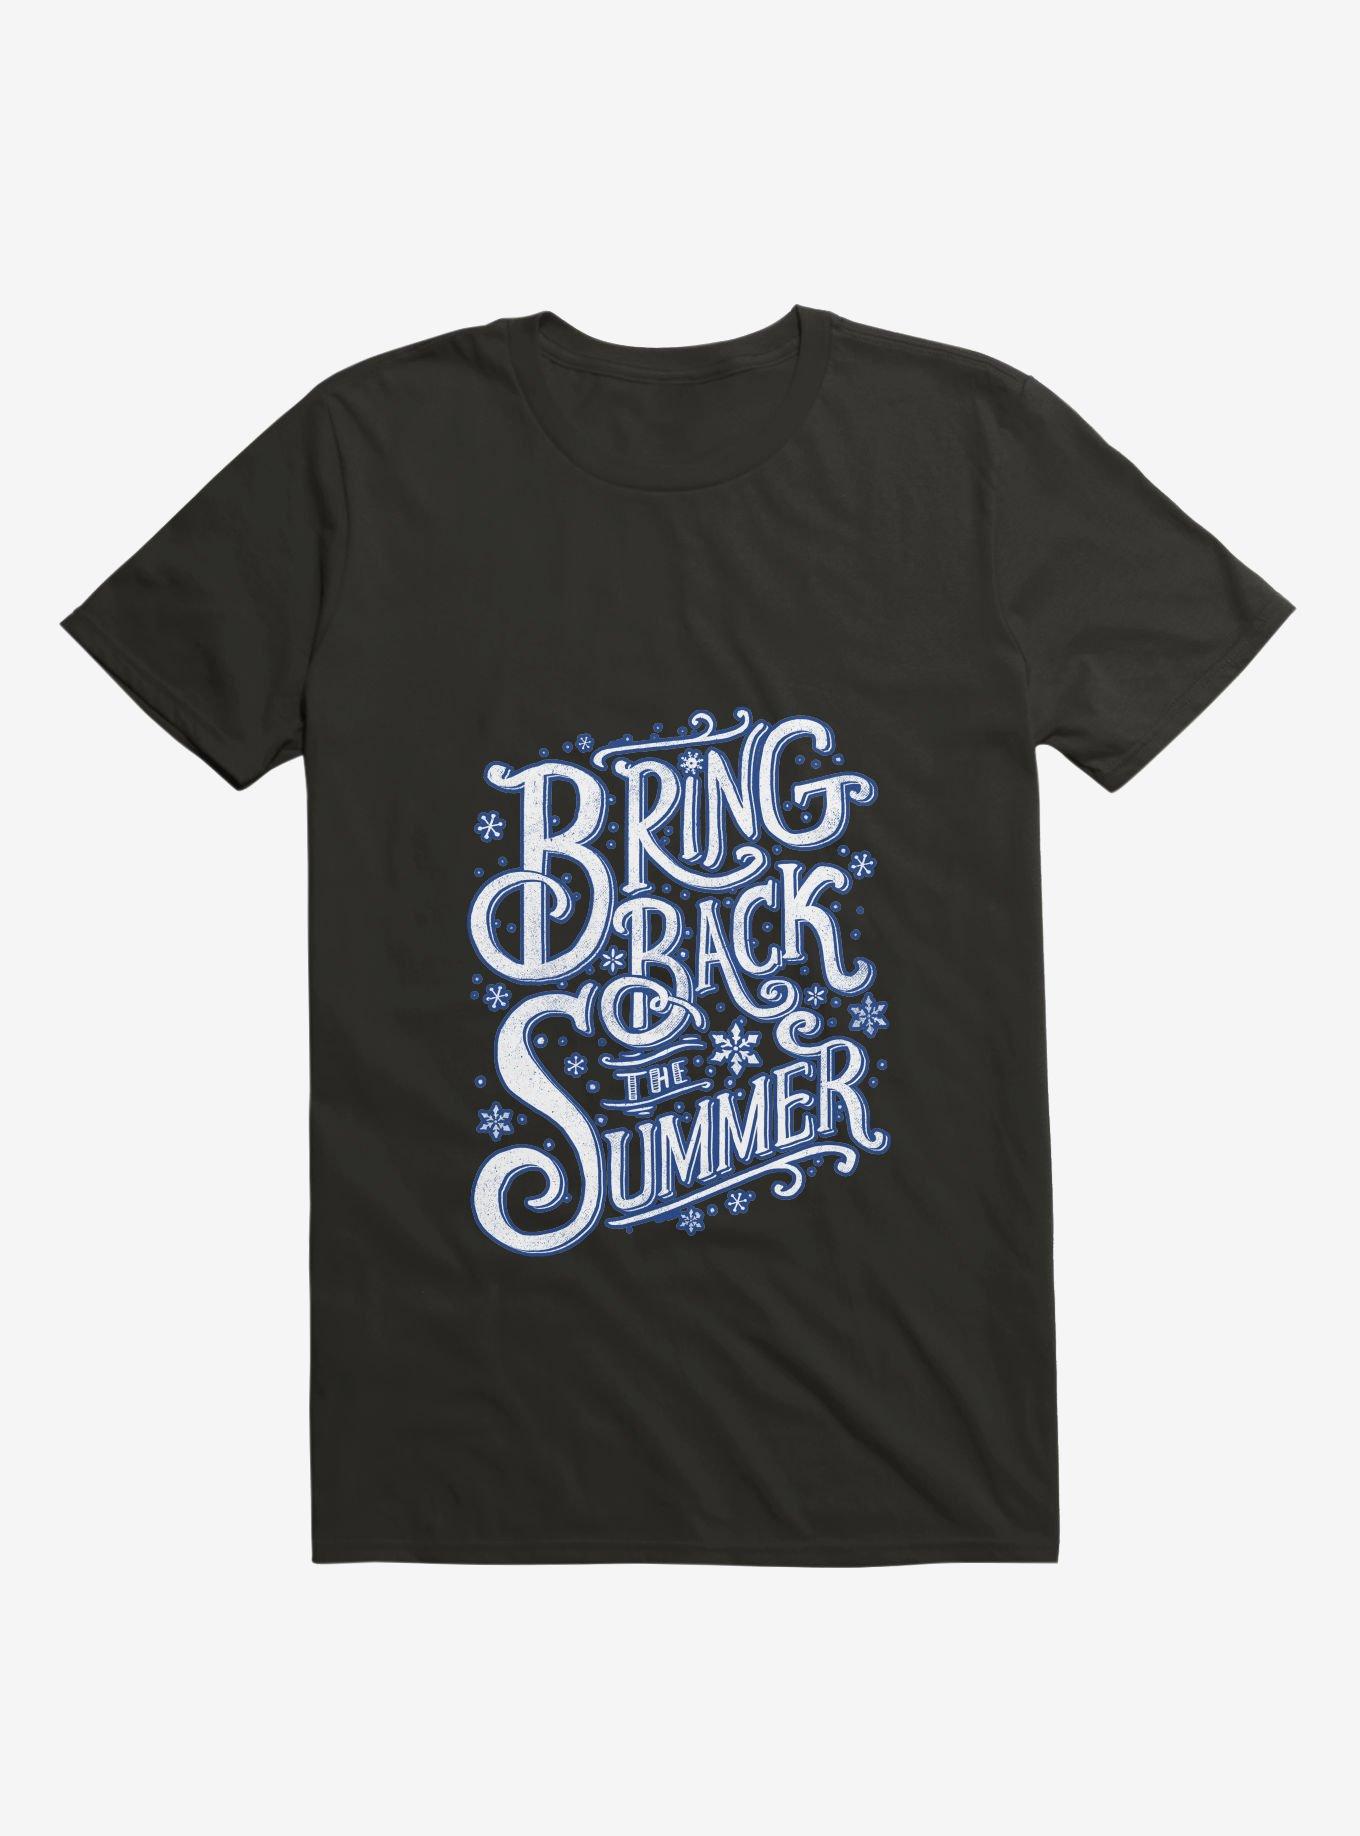 Bring Back The Summer T-Shirt